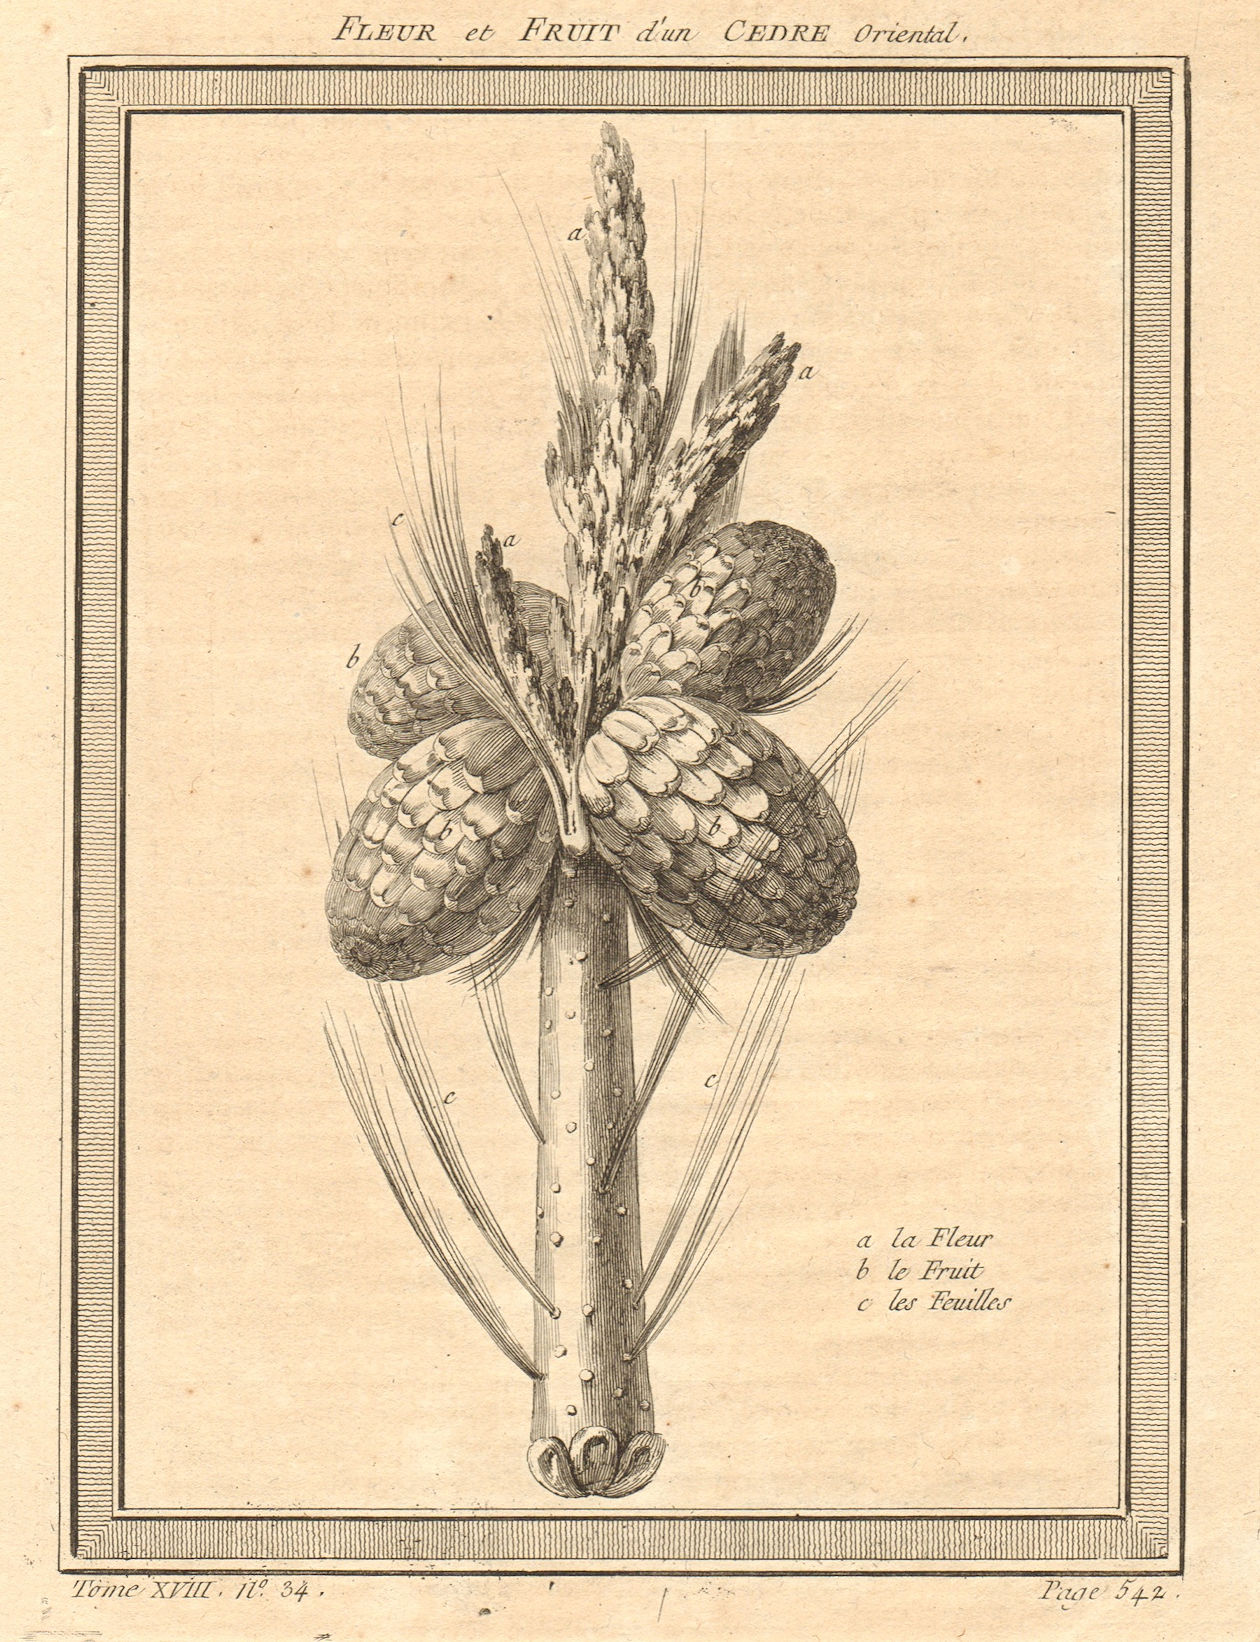 Associate Product 'Fleur et Fruits d'un Cèdre Oriental' Oriental Cedar fruit & flower. Russia 1768